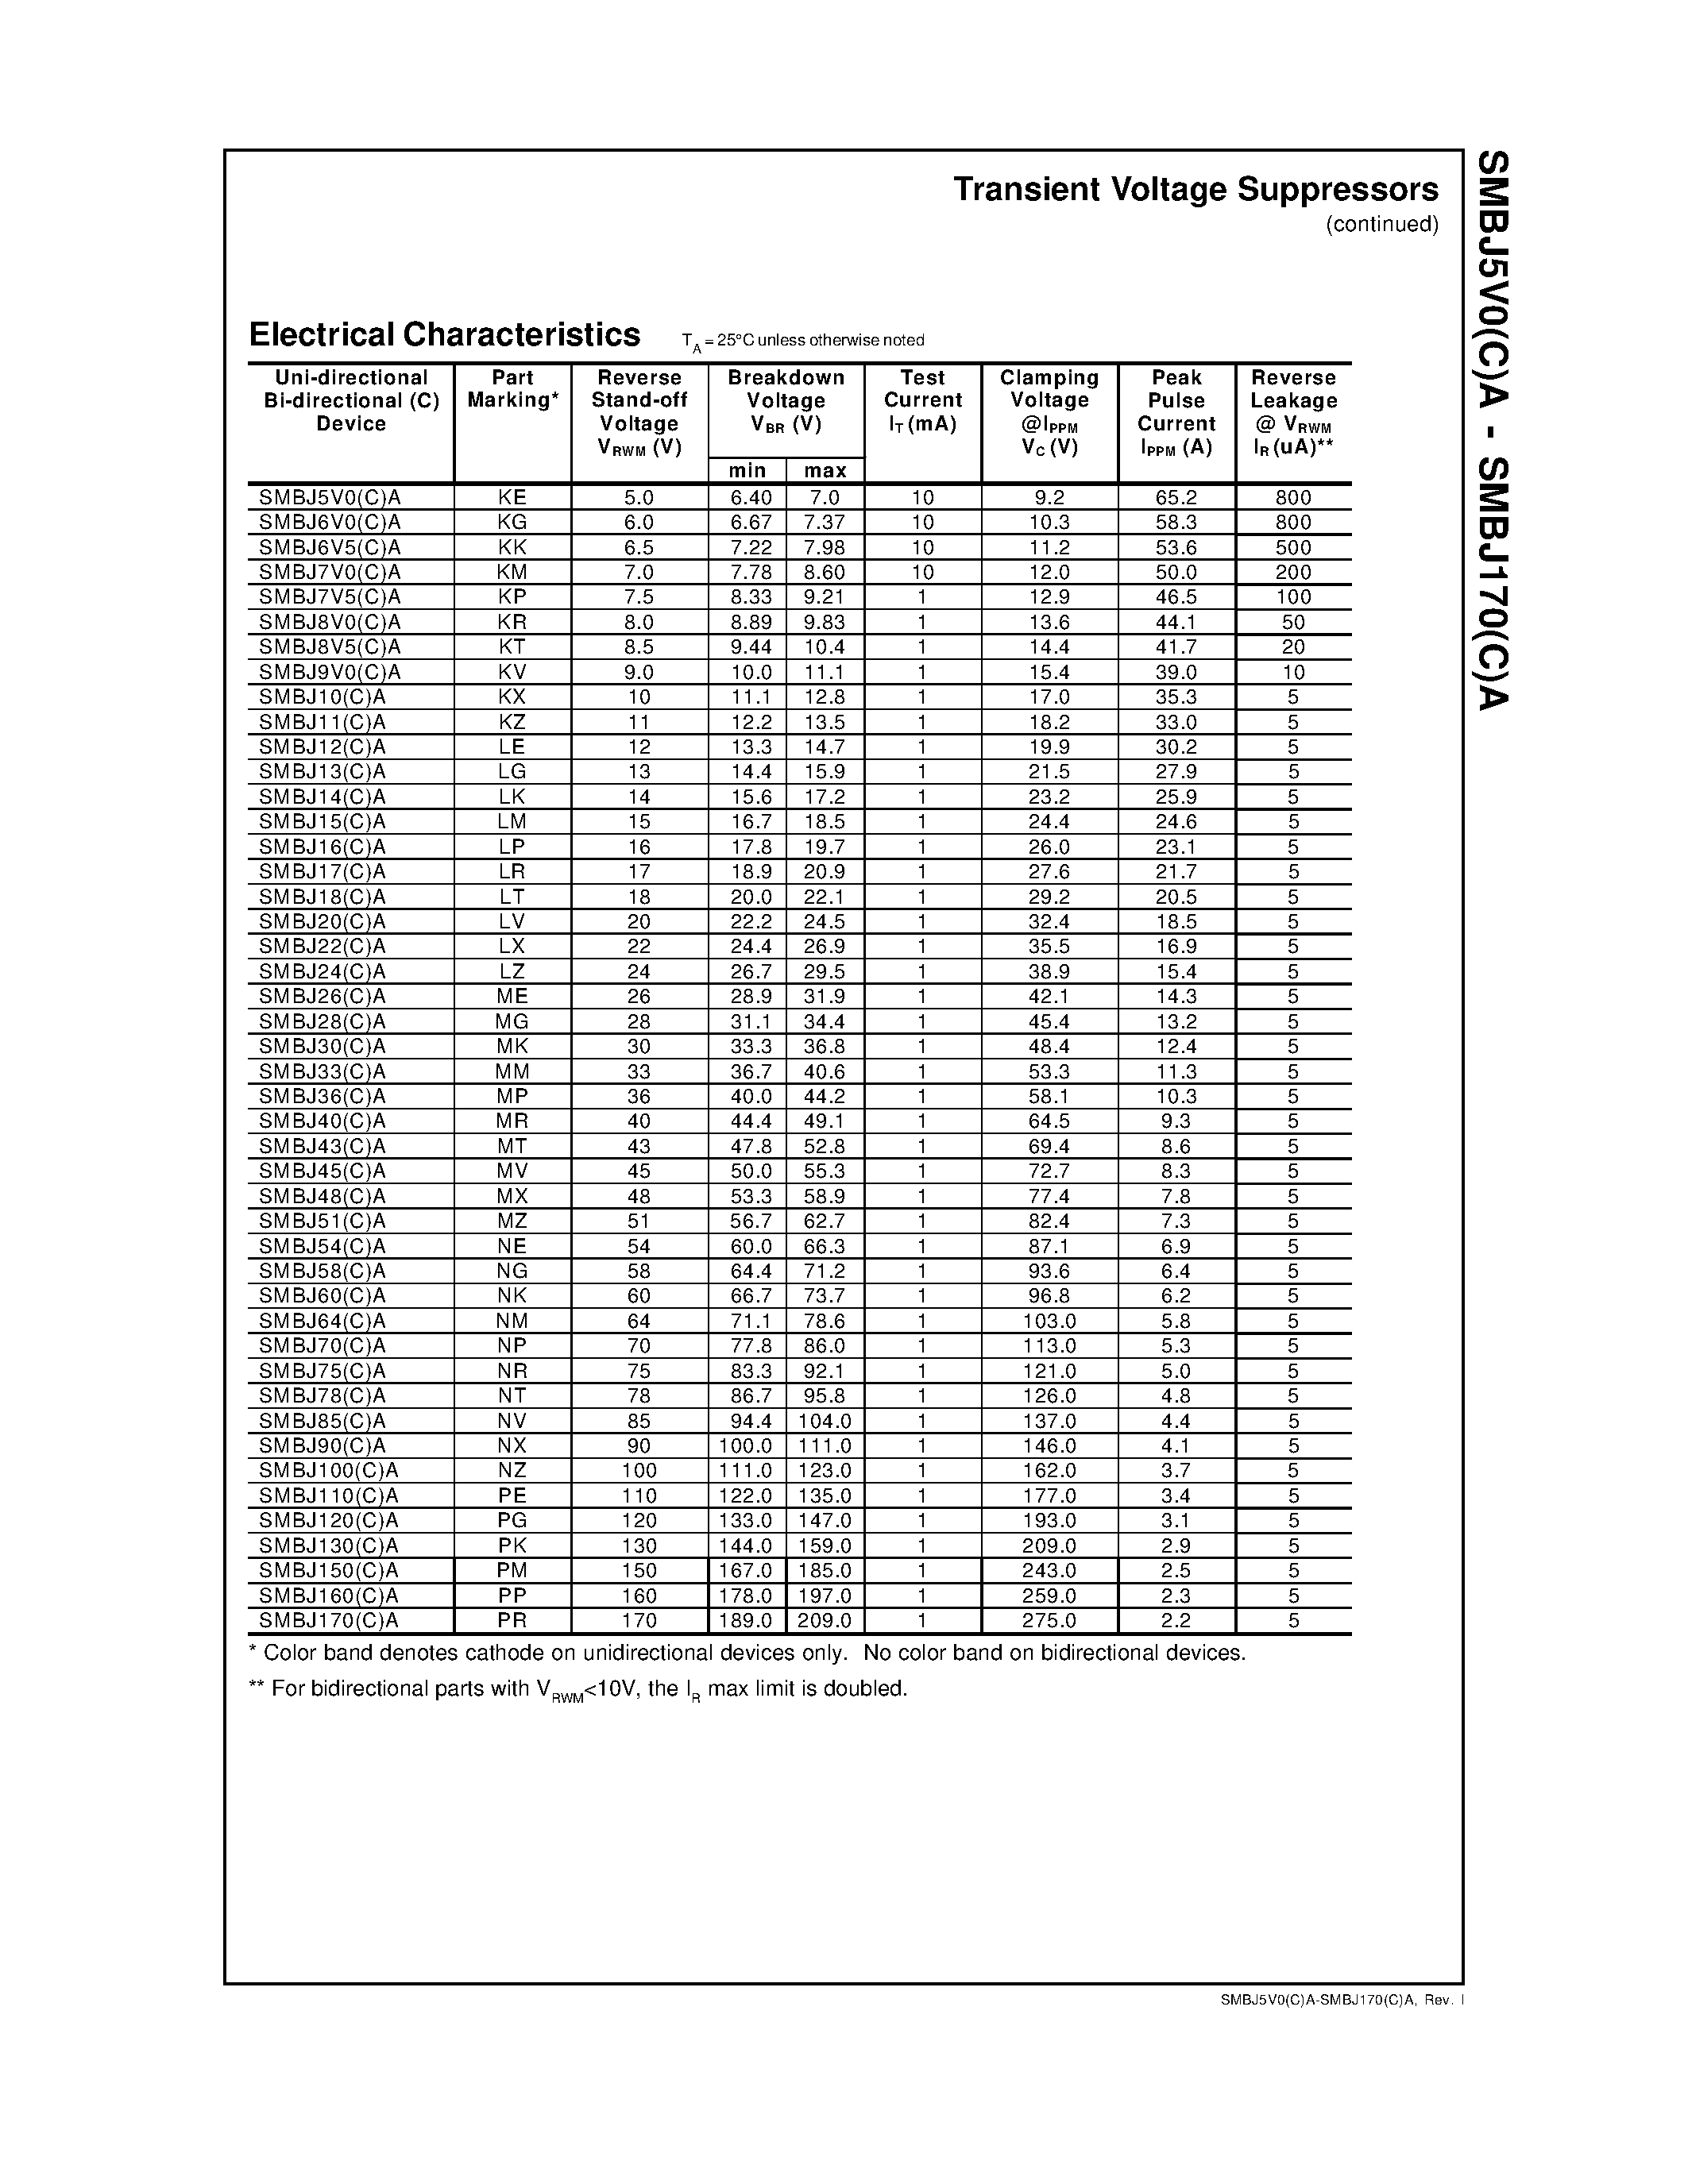 Datasheet SMBJ15A - Transient Voltage Suppressors SMBJ5V0(C)A - SMBJ170(C)A page 2